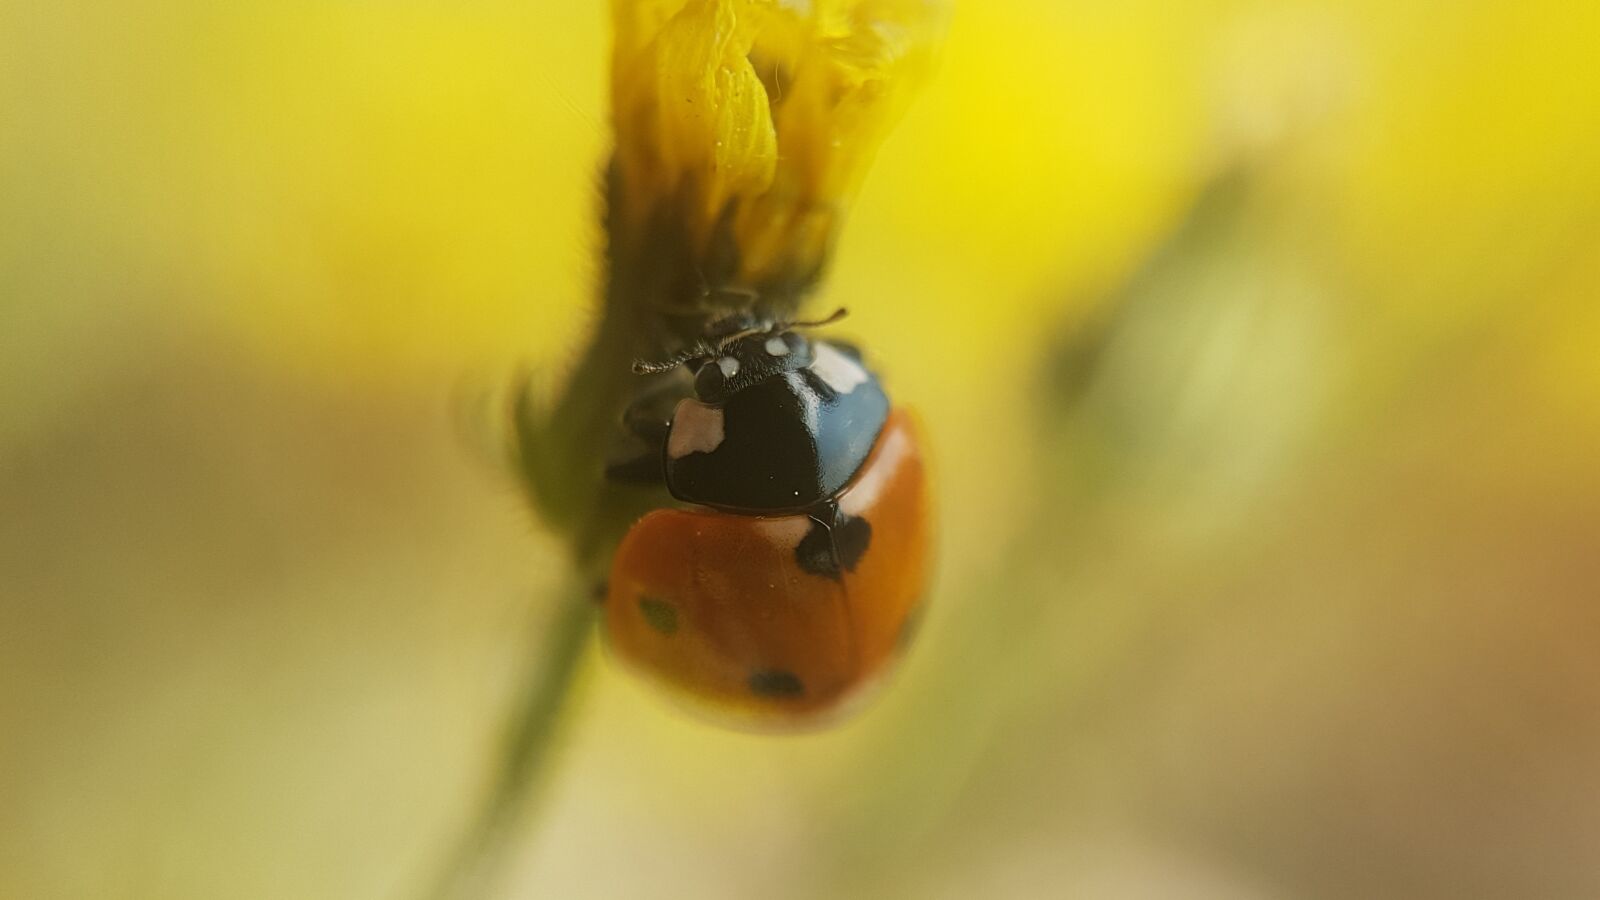 Samsung Galaxy S7 sample photo. Ladybug, beetle, nature photography